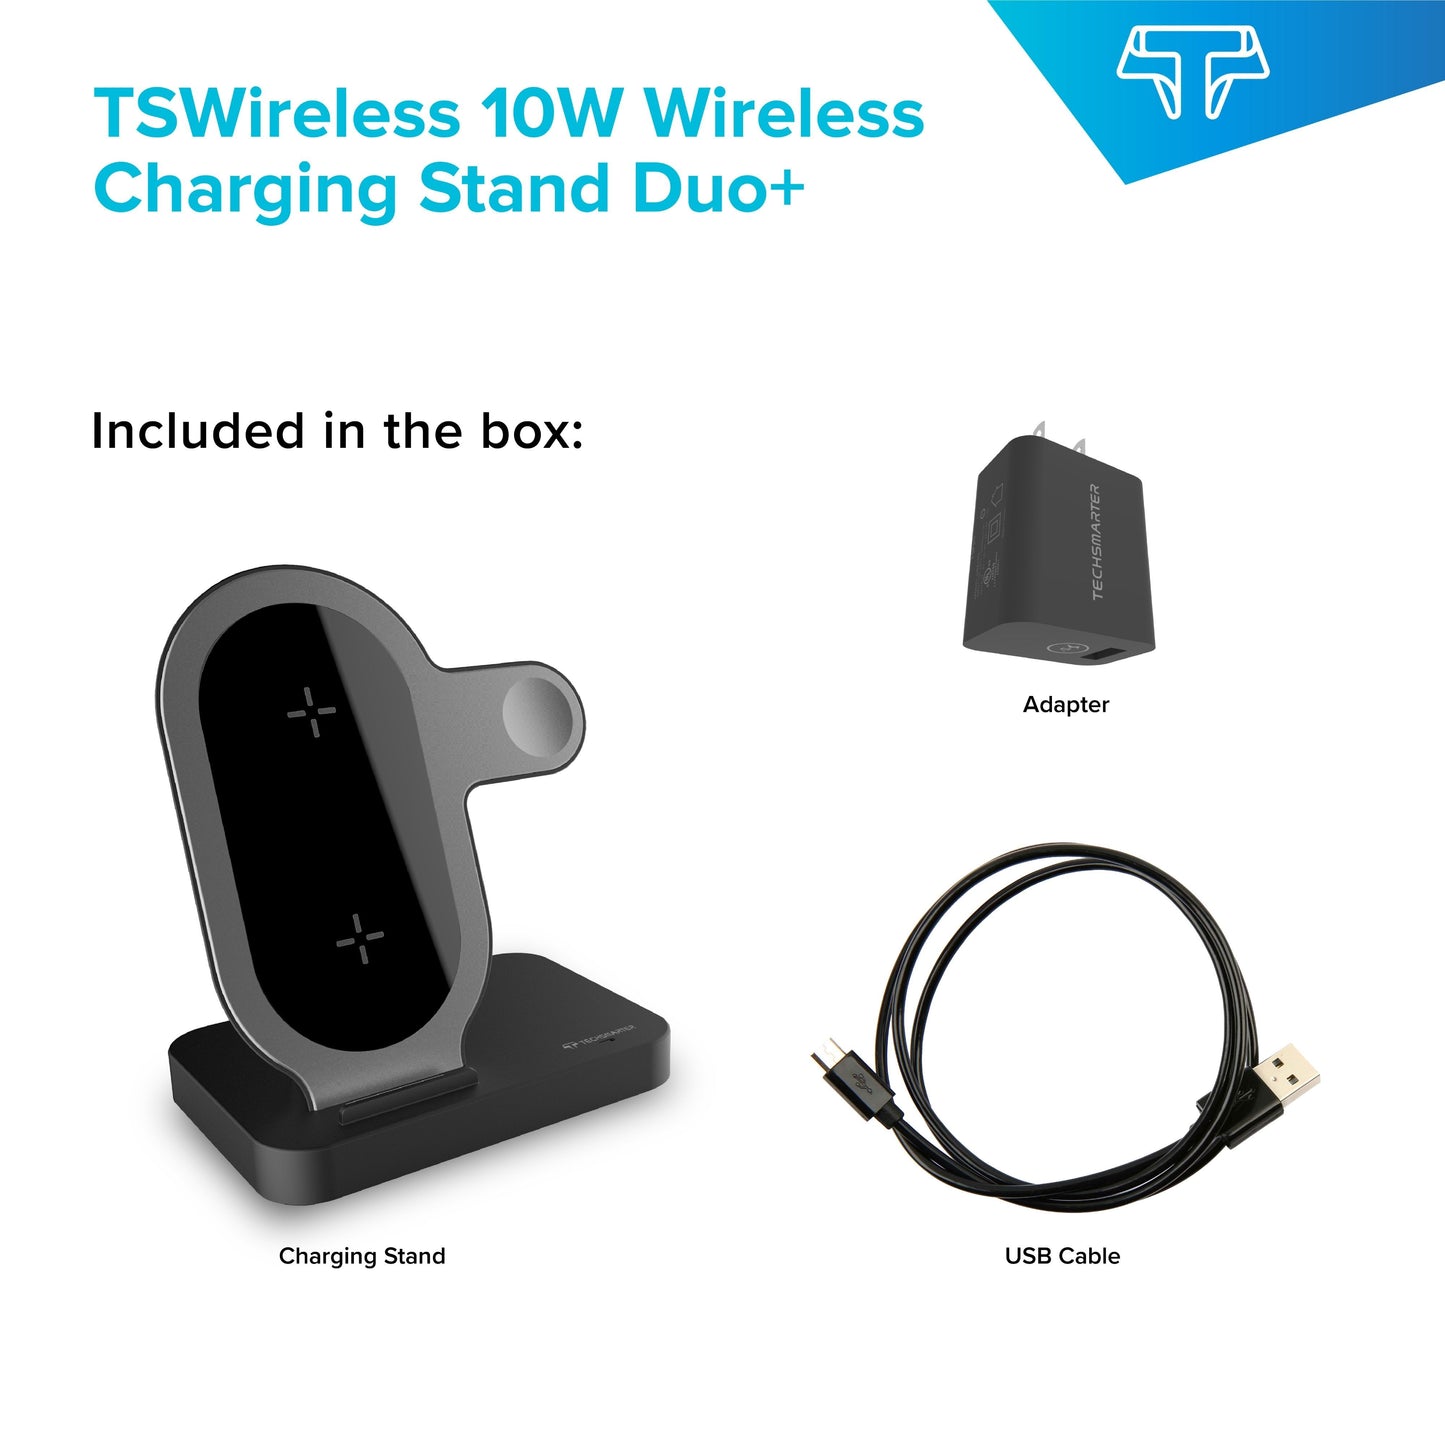 TSWireless 10W Wireless Charger & Dock - TechsmarterTechsmarterCharging Stand